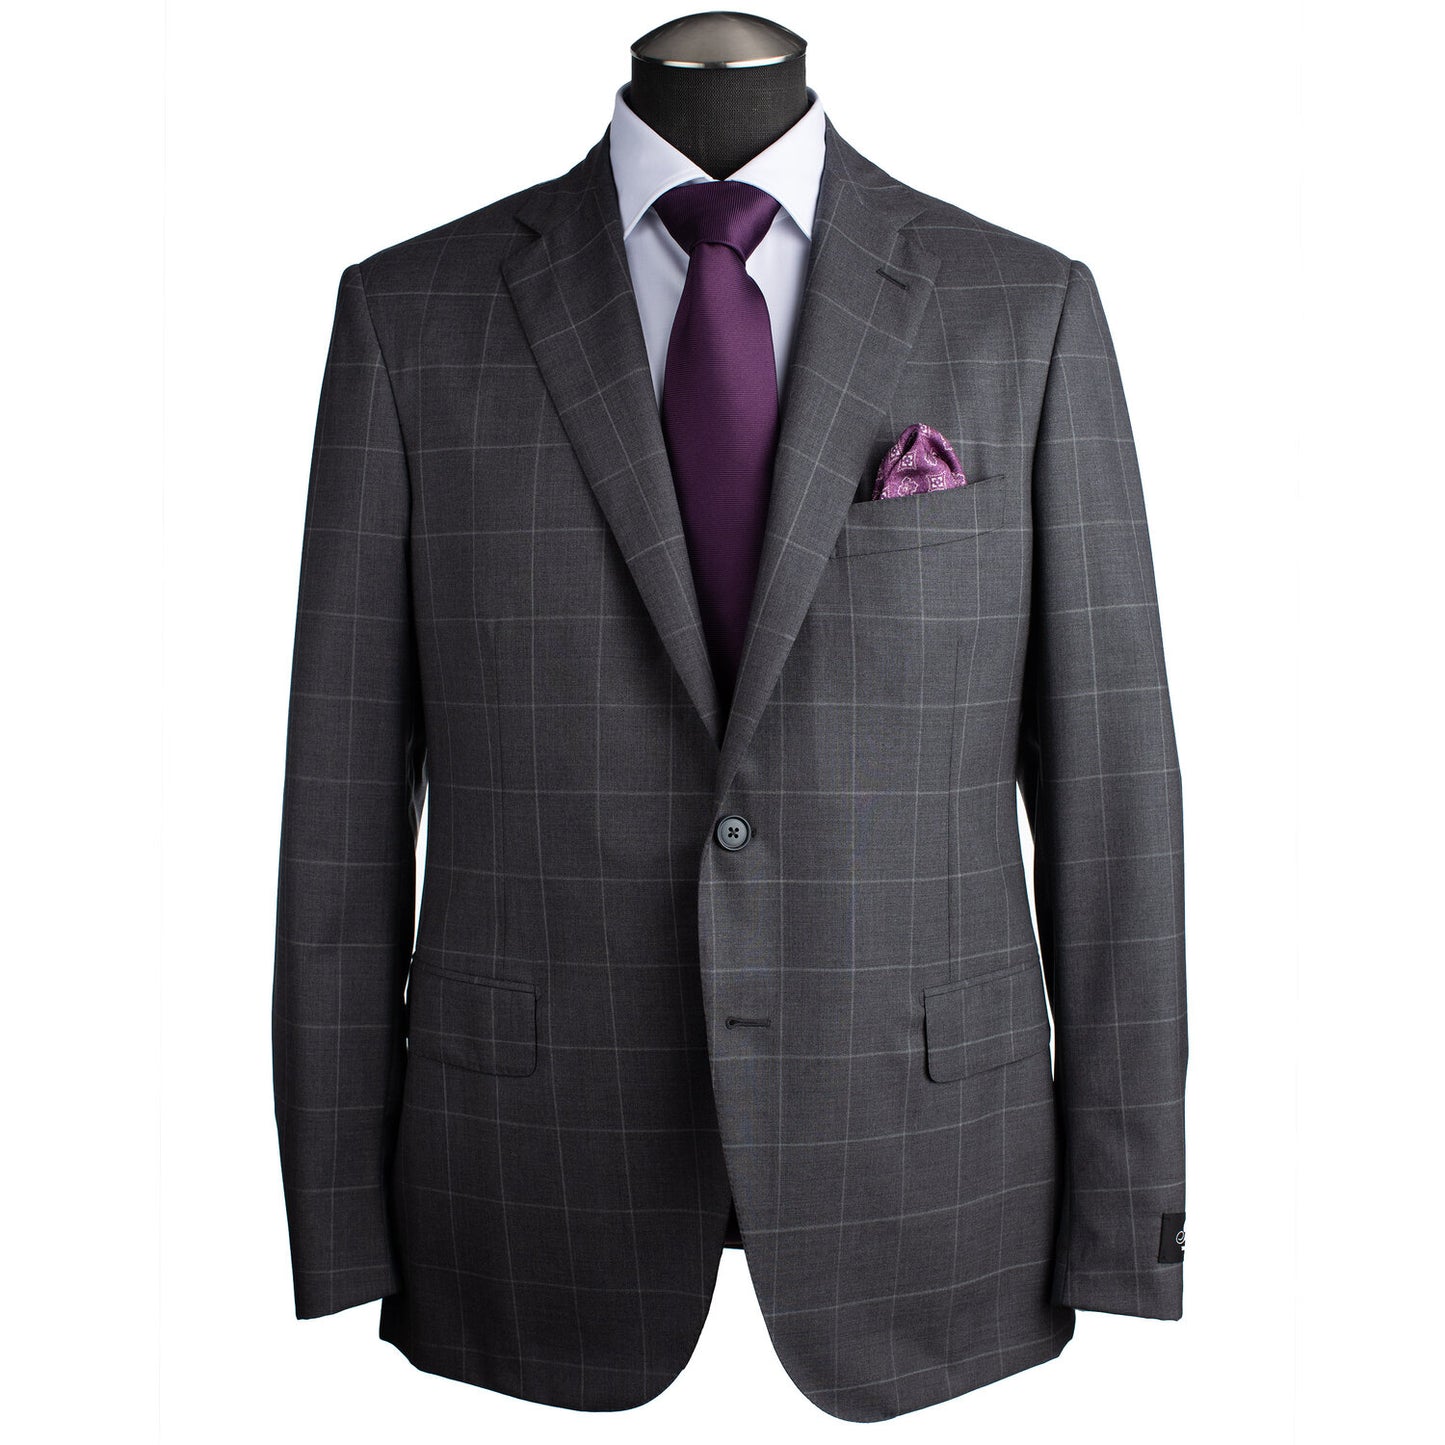 Belvest Super 130 Suit in Mid Gray Windowpane